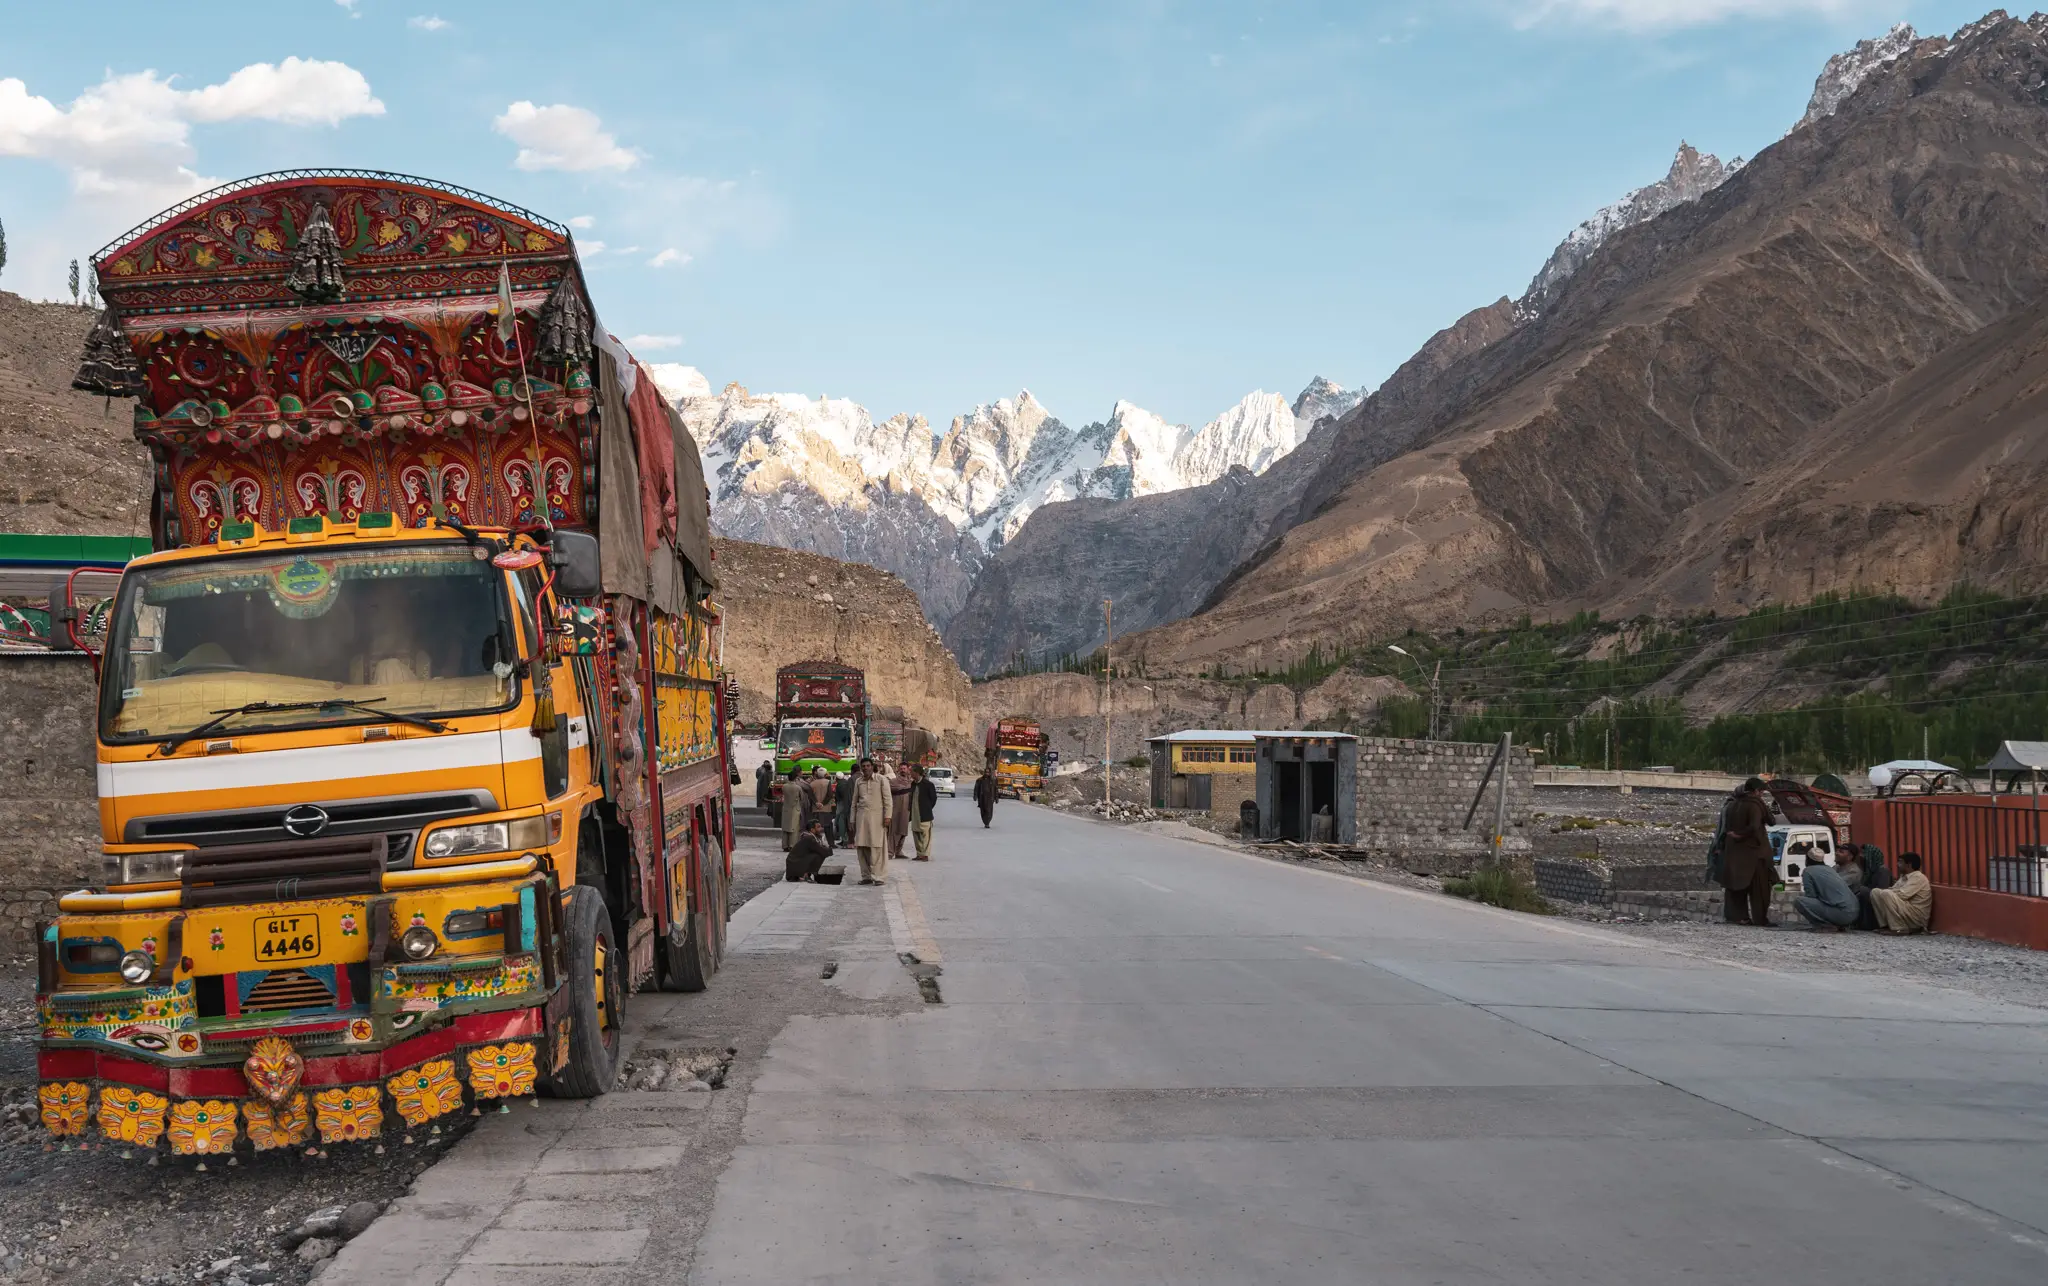 Colourful Pakistani trucks are a famous symbol of the Karakoram Highway